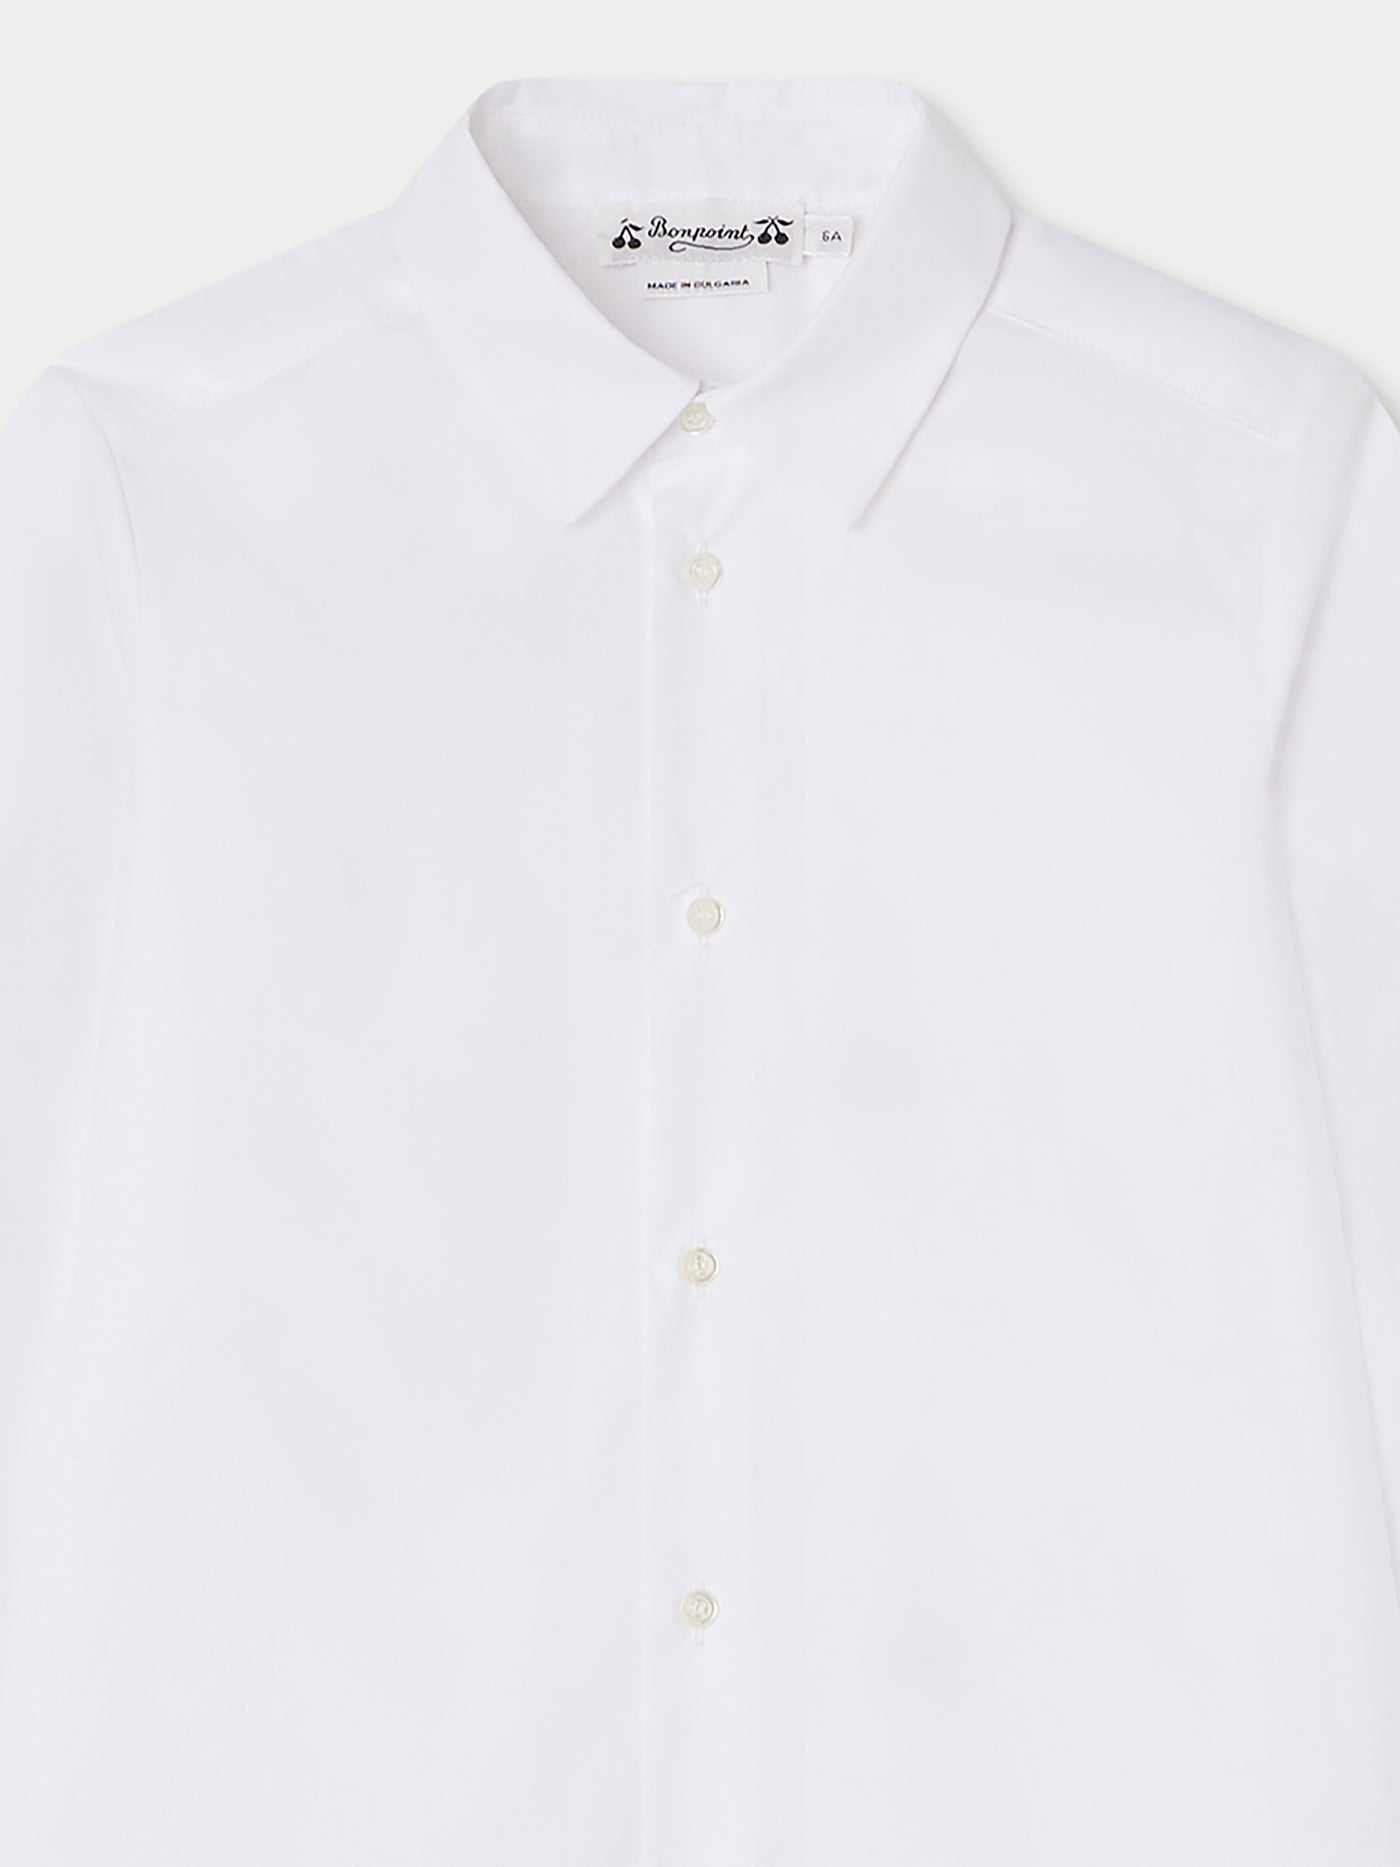 Aristote Shirt white